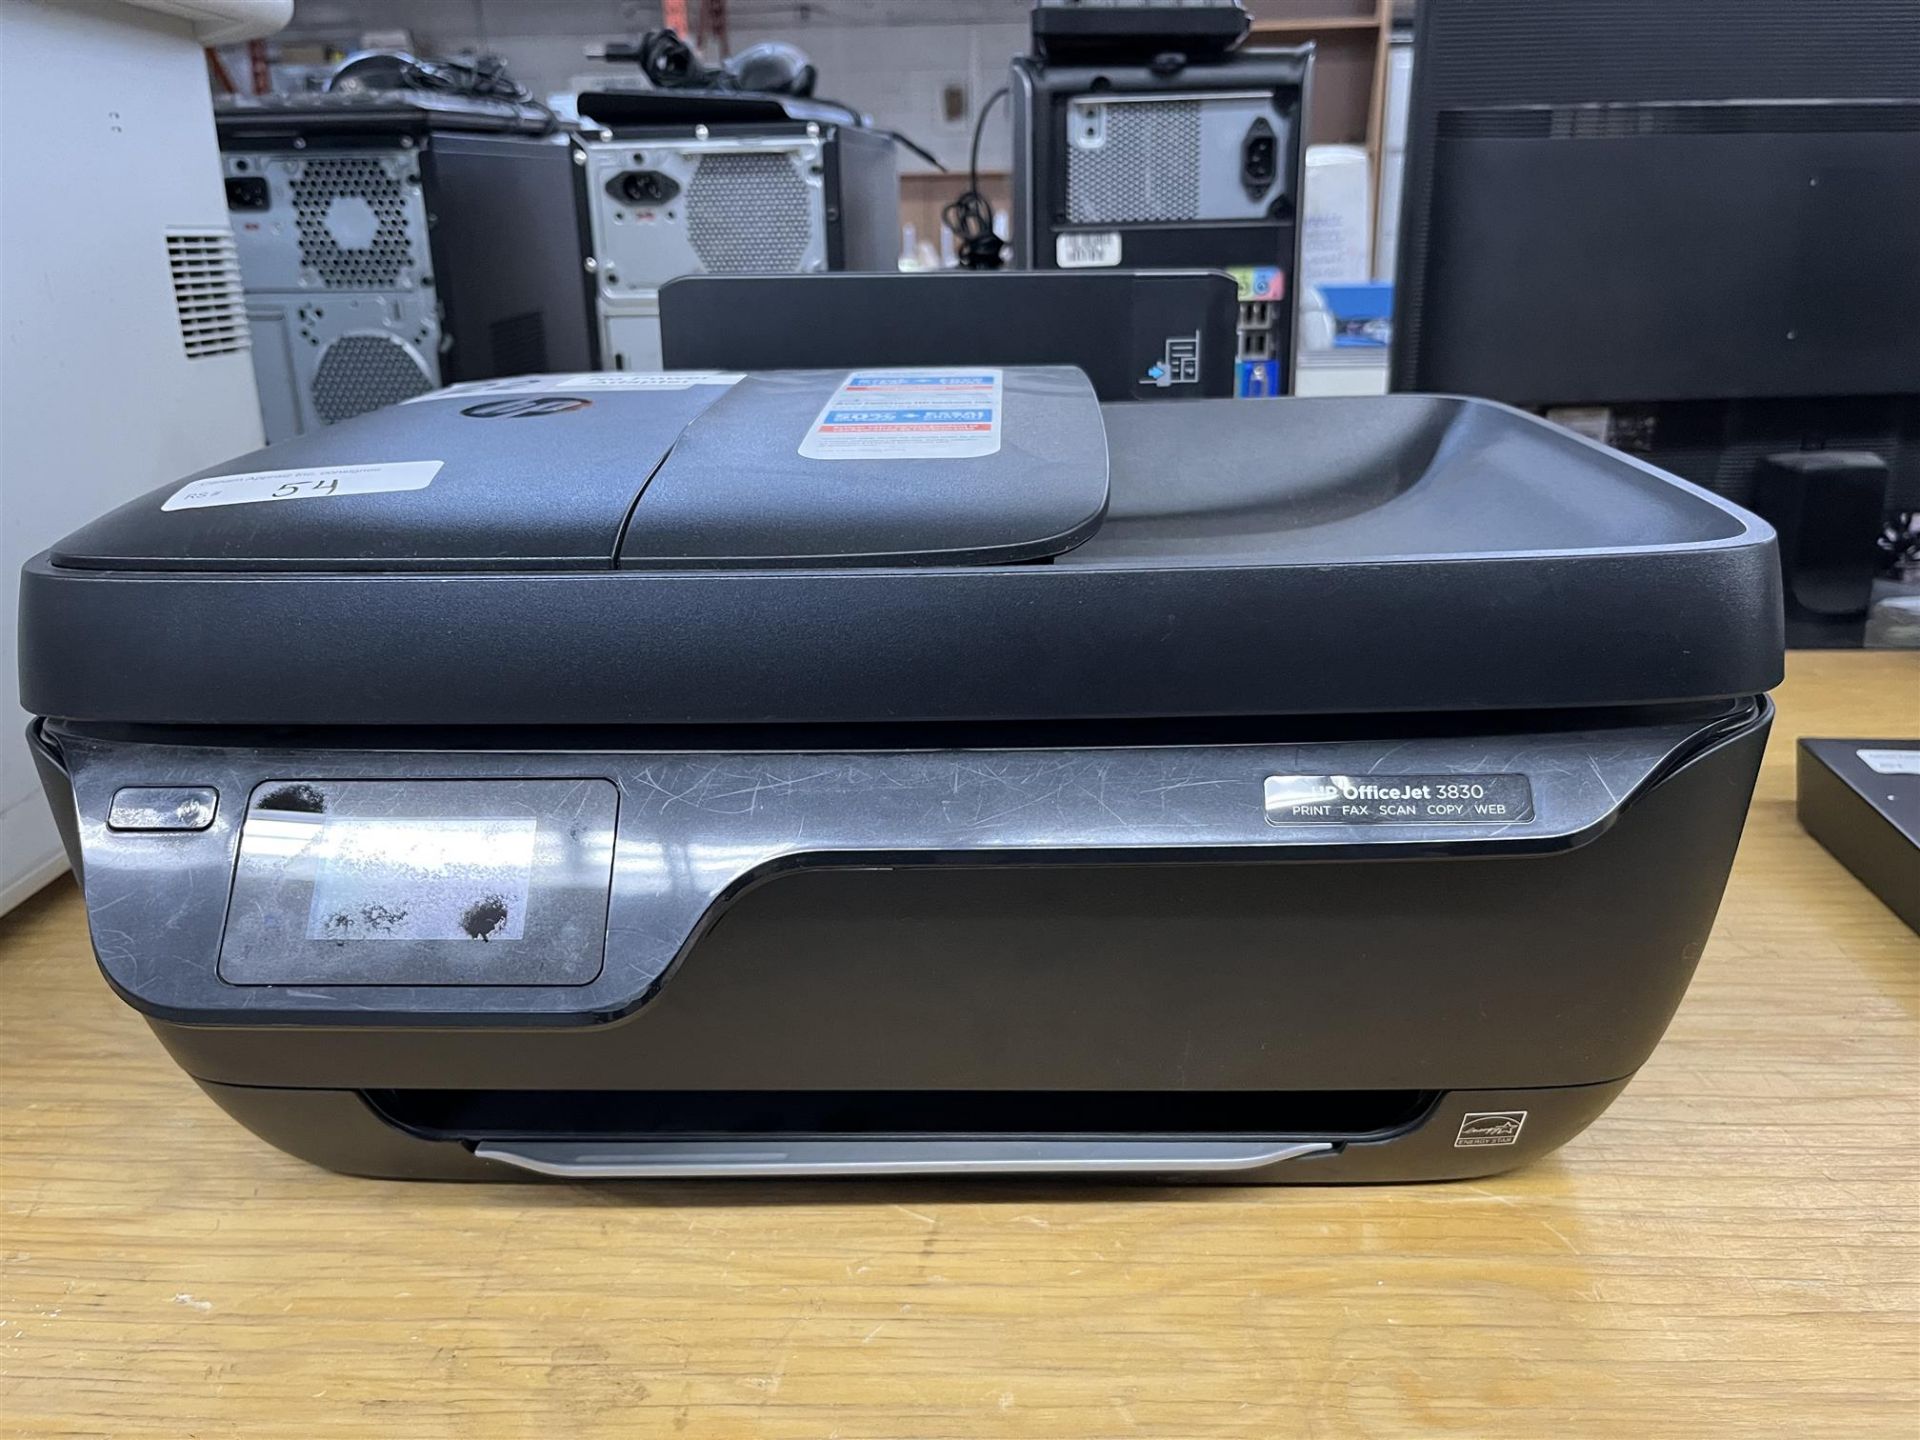 HP - Printer - Mo#: OfficeJet 3830 - Image 2 of 2